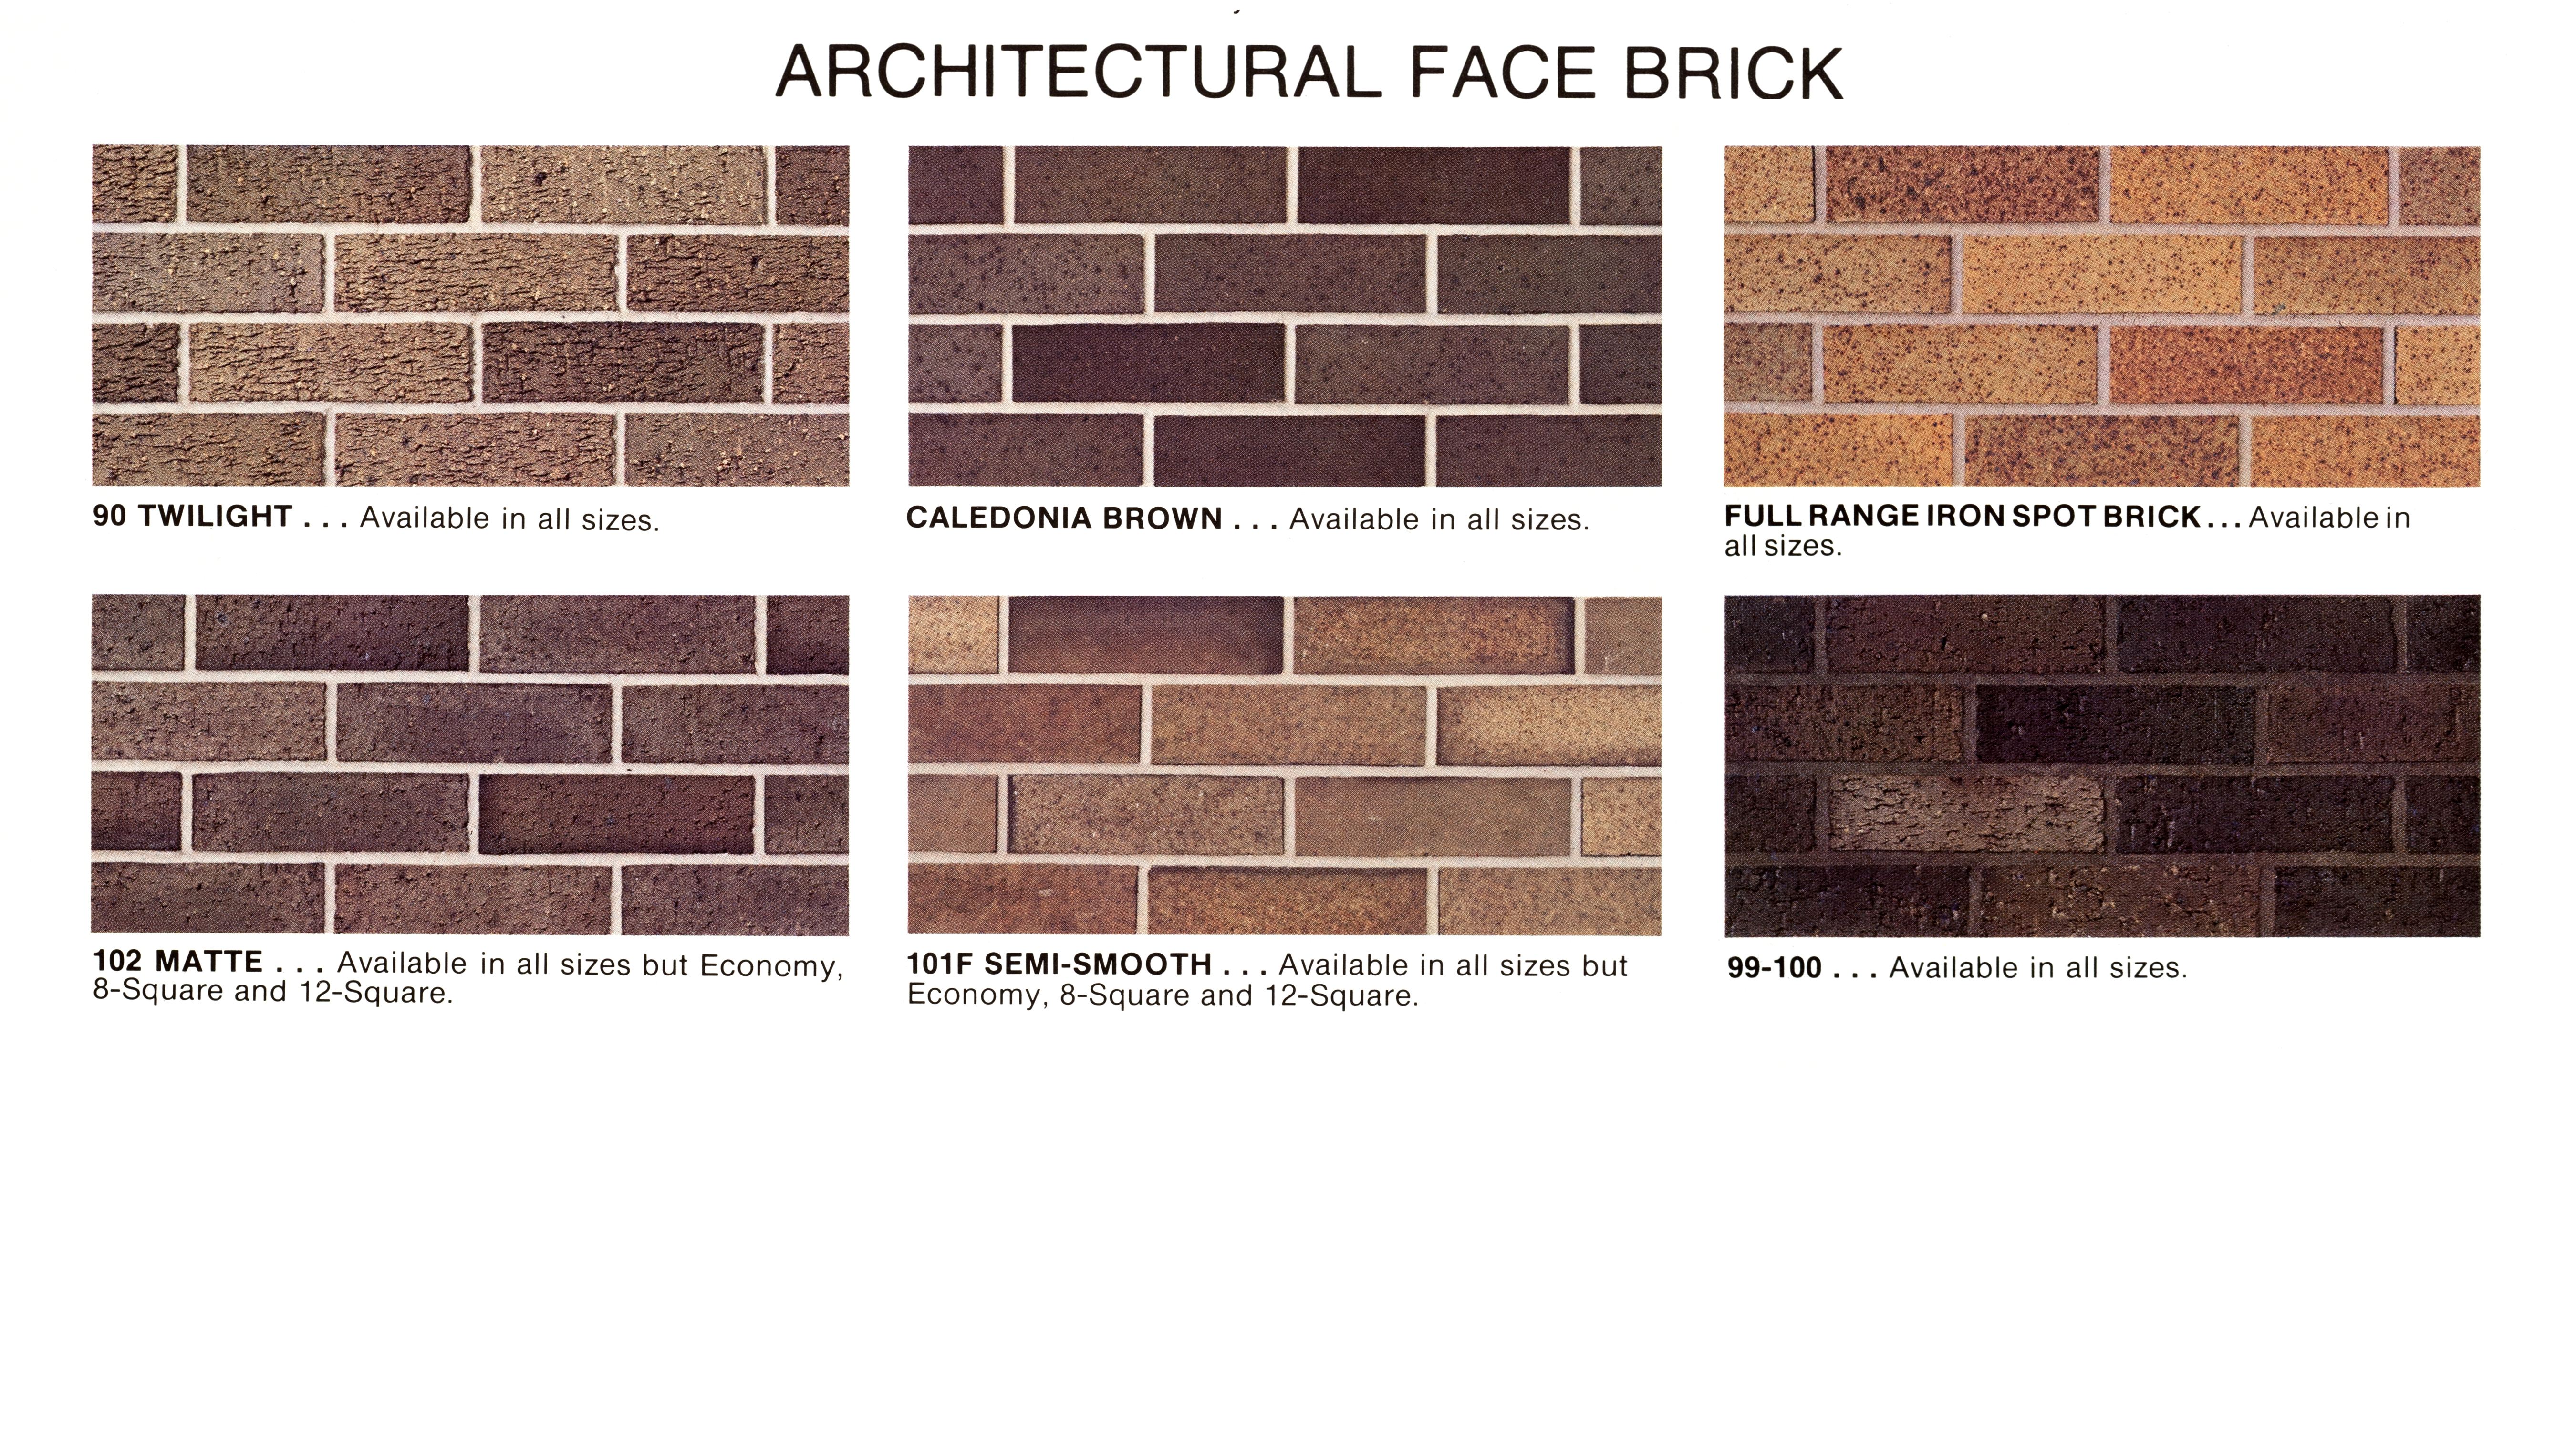 architec face brick-samples from brochure